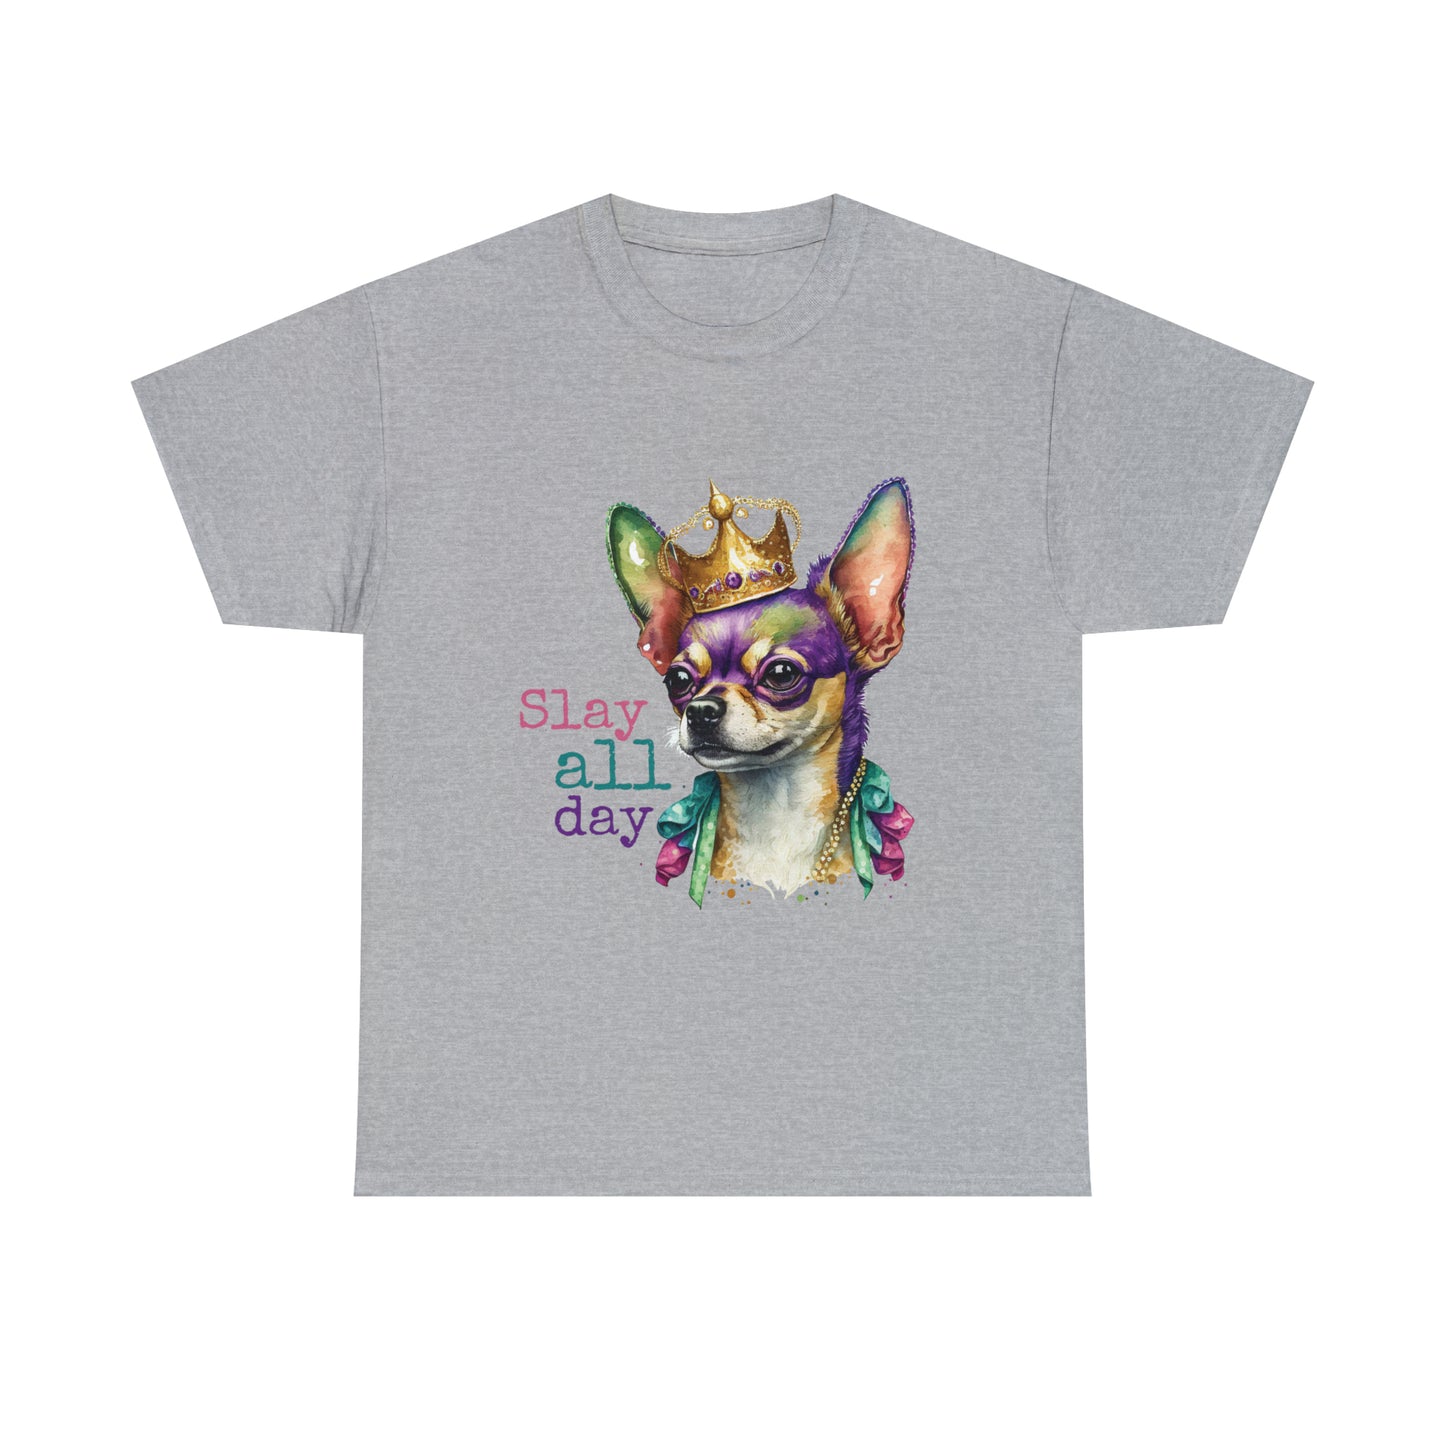 Funny dog themed t-shirt